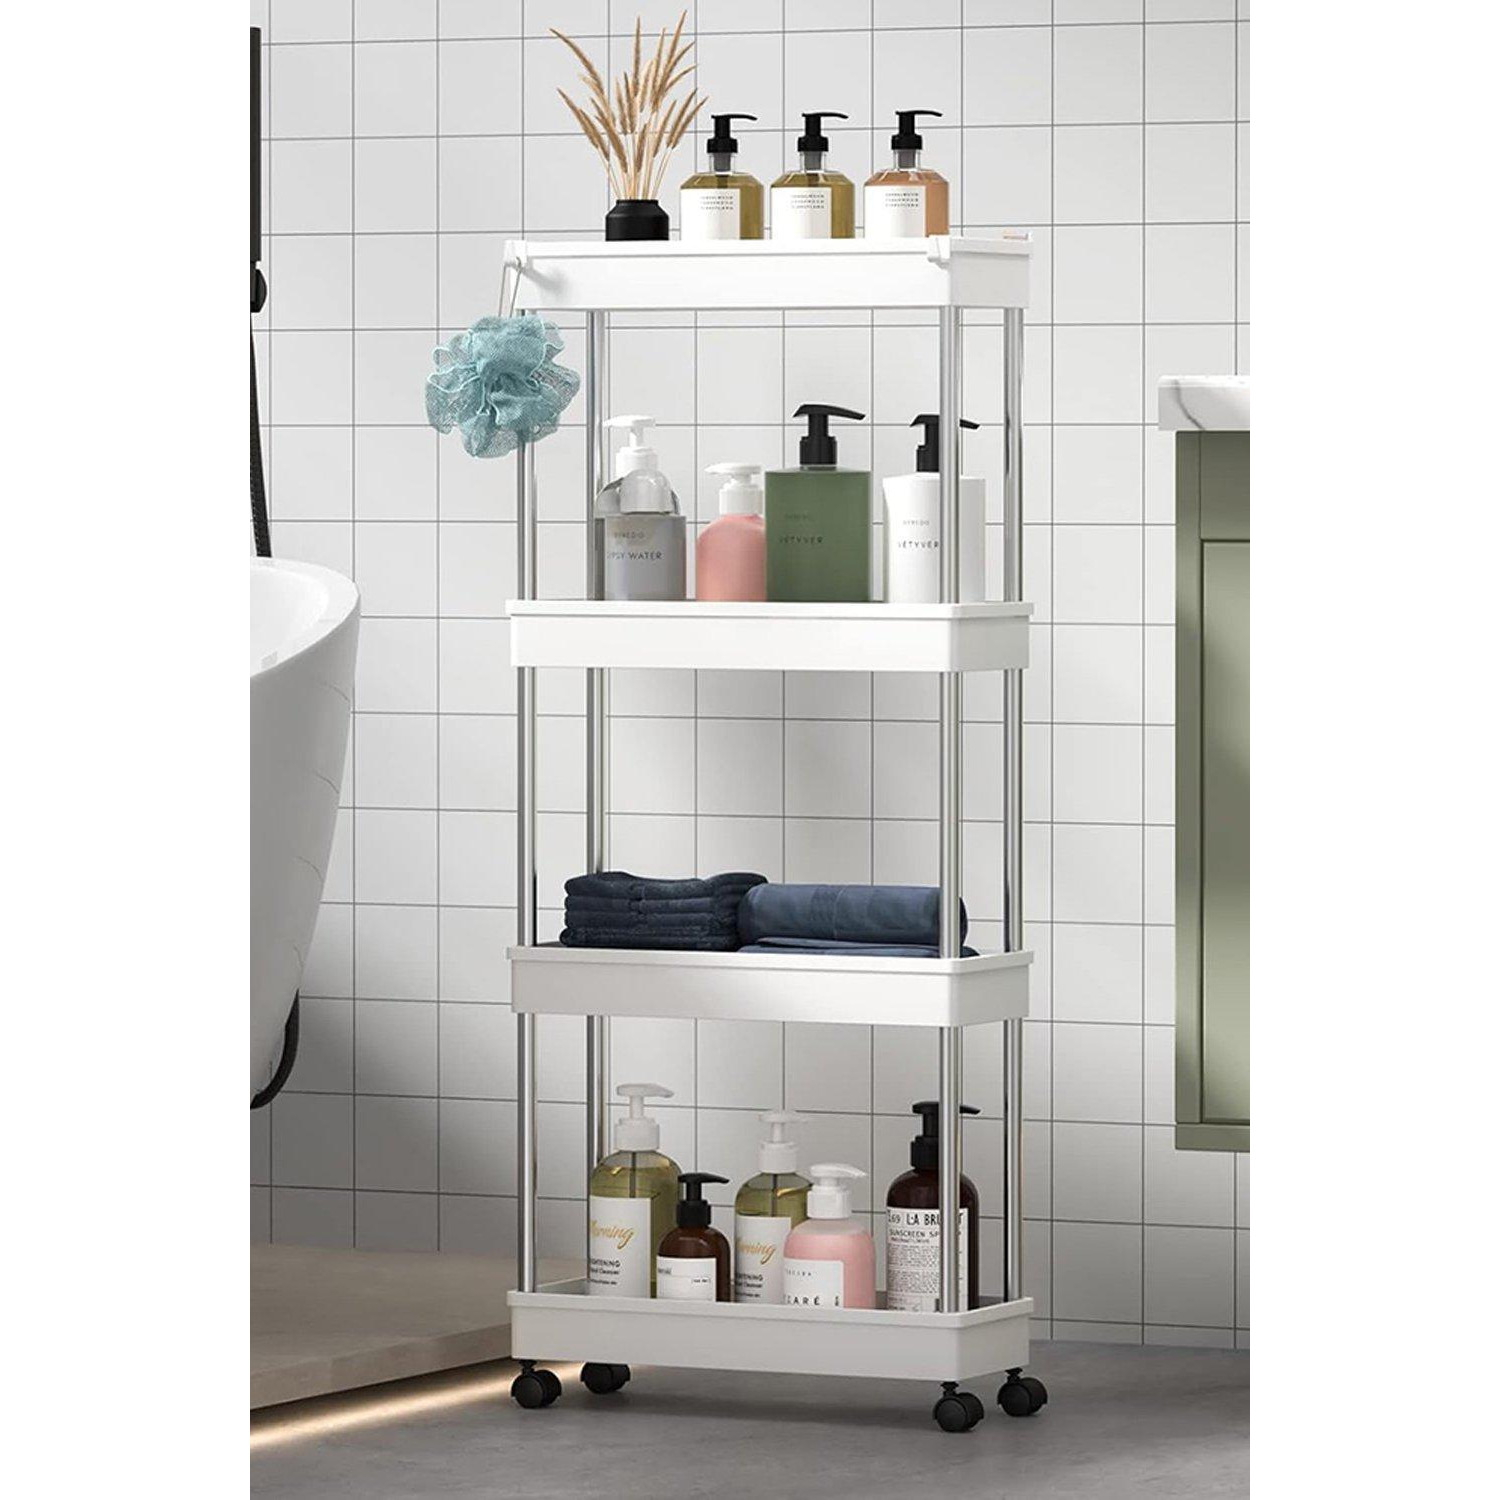 4 Tiers Shelf Trolley Cart Storage Rack Organizer with Wheels Hooks for Kitchen Bathroom - image 1